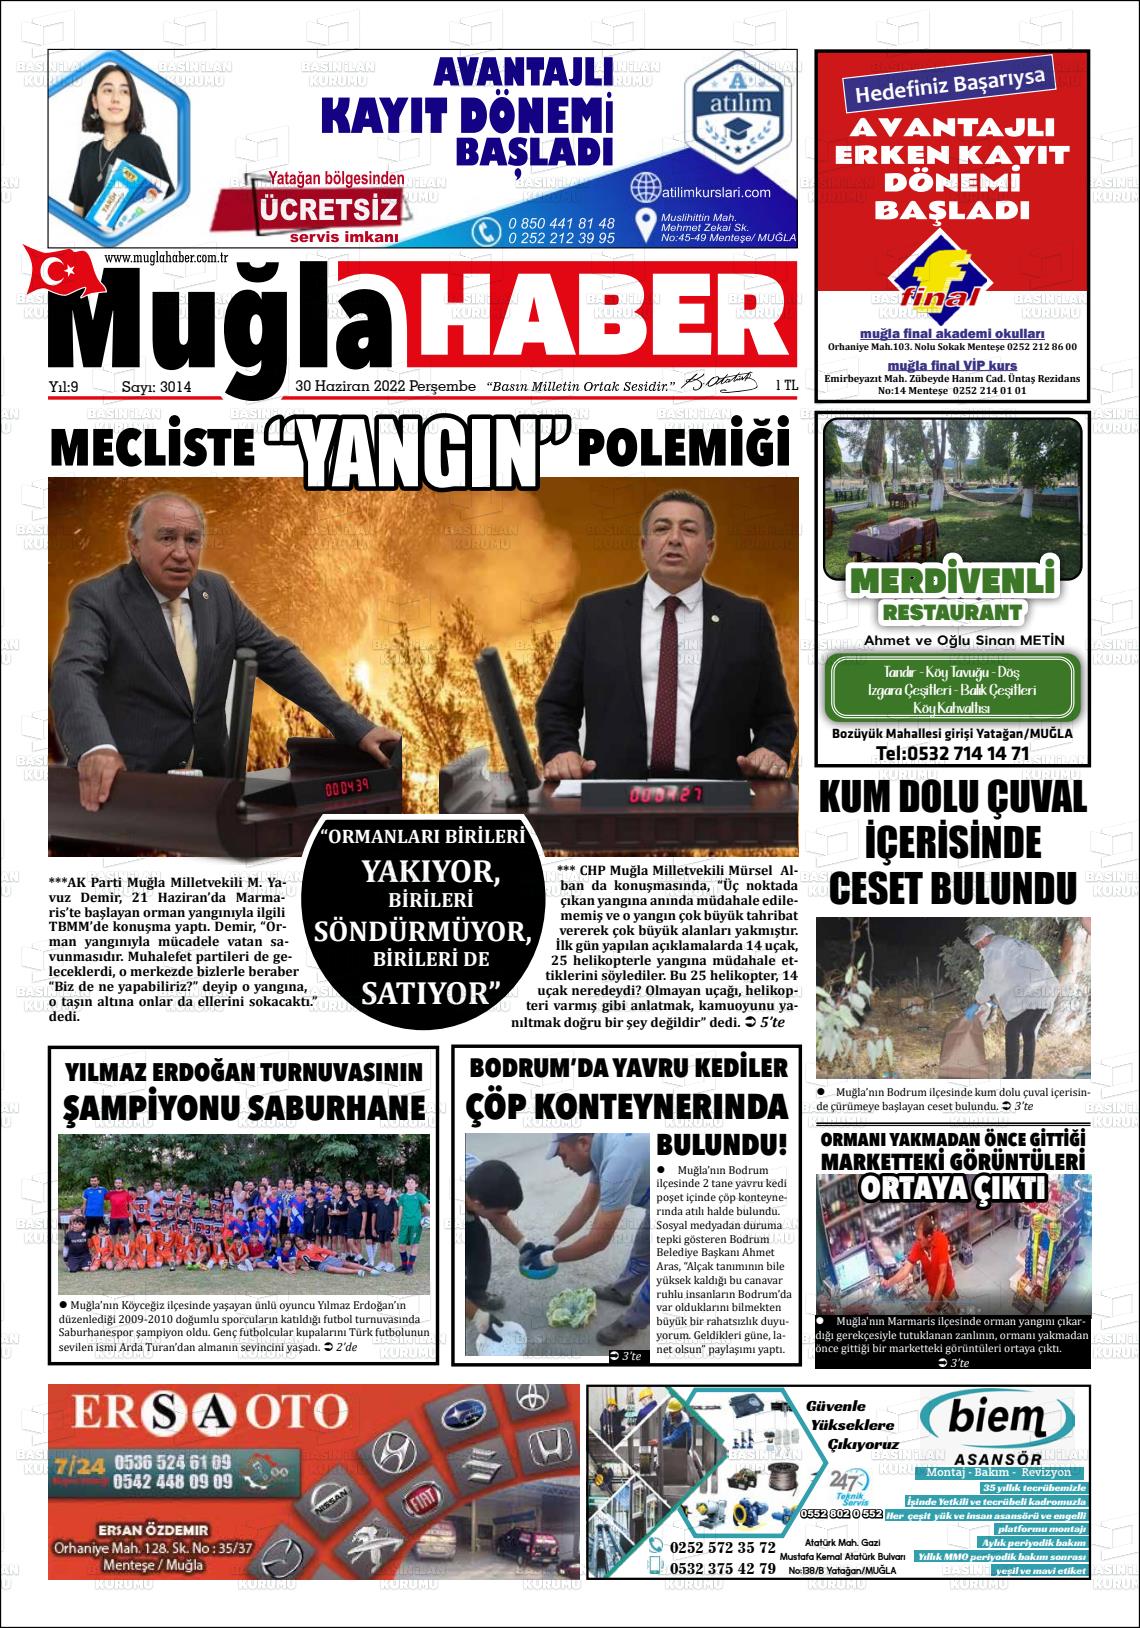 30 Haziran 2022 Muğla Haber Gazete Manşeti